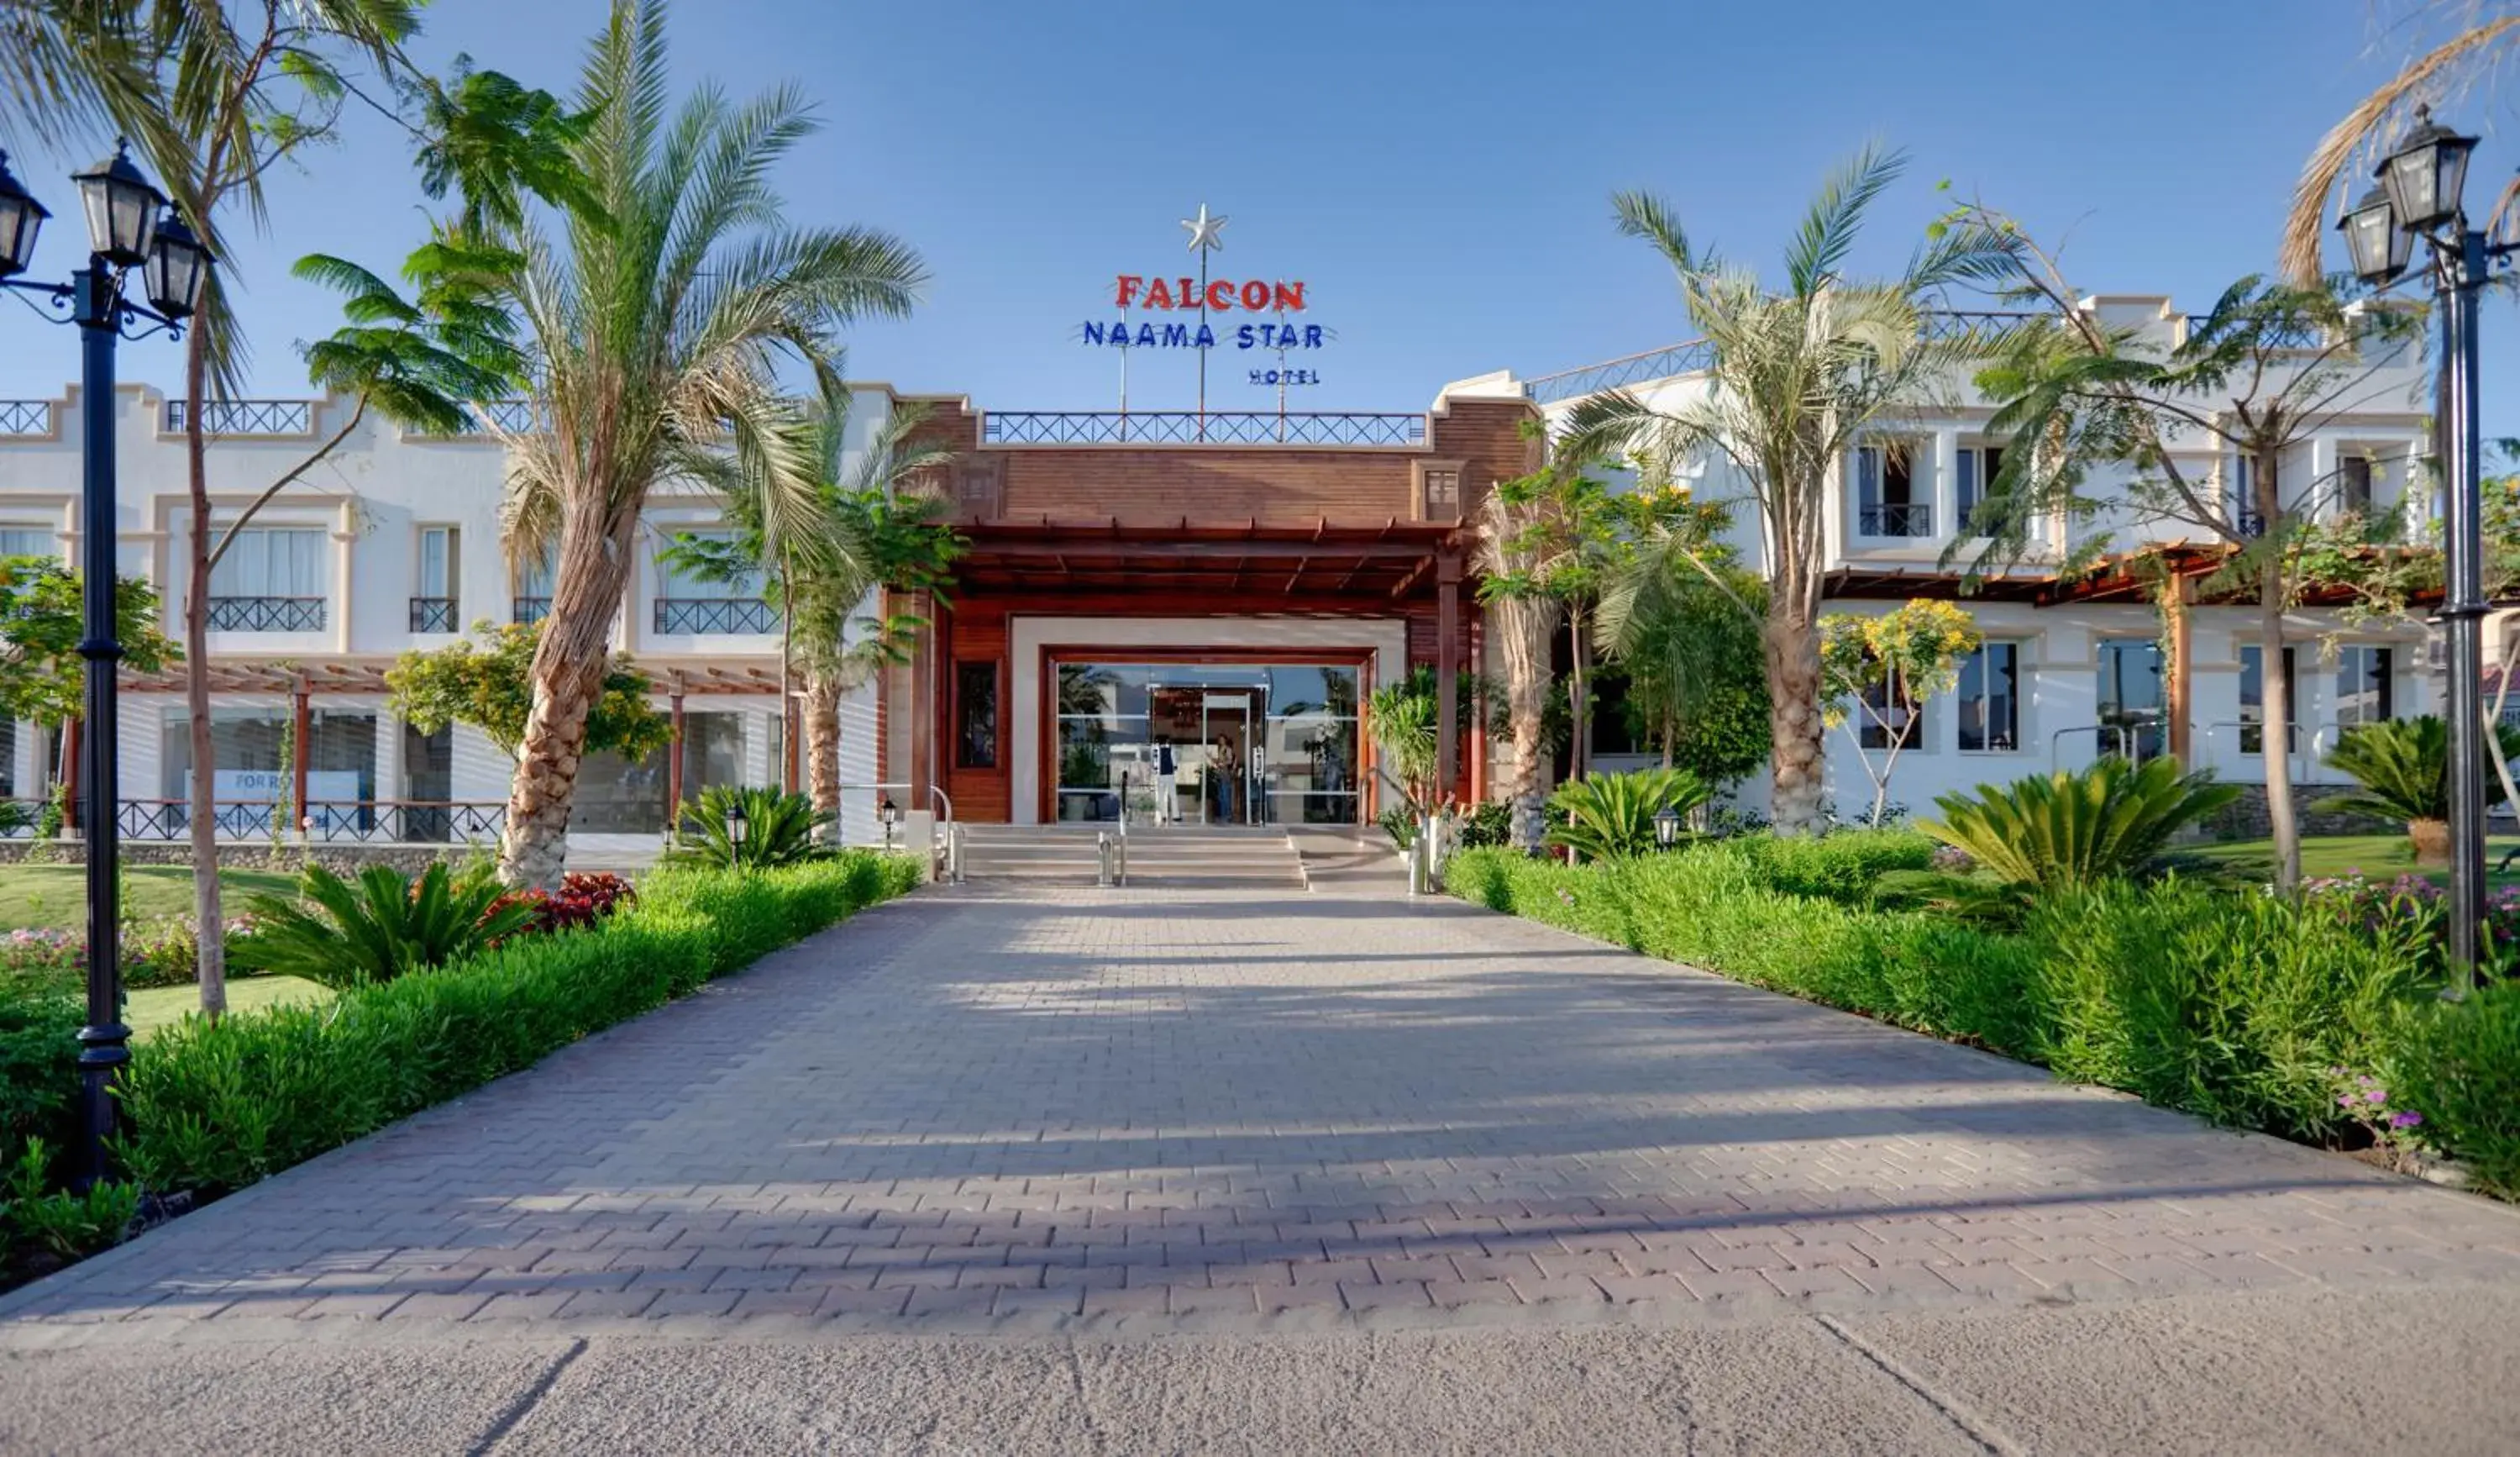 Facade/entrance, Property Building in Falcon Naama Star Hotel